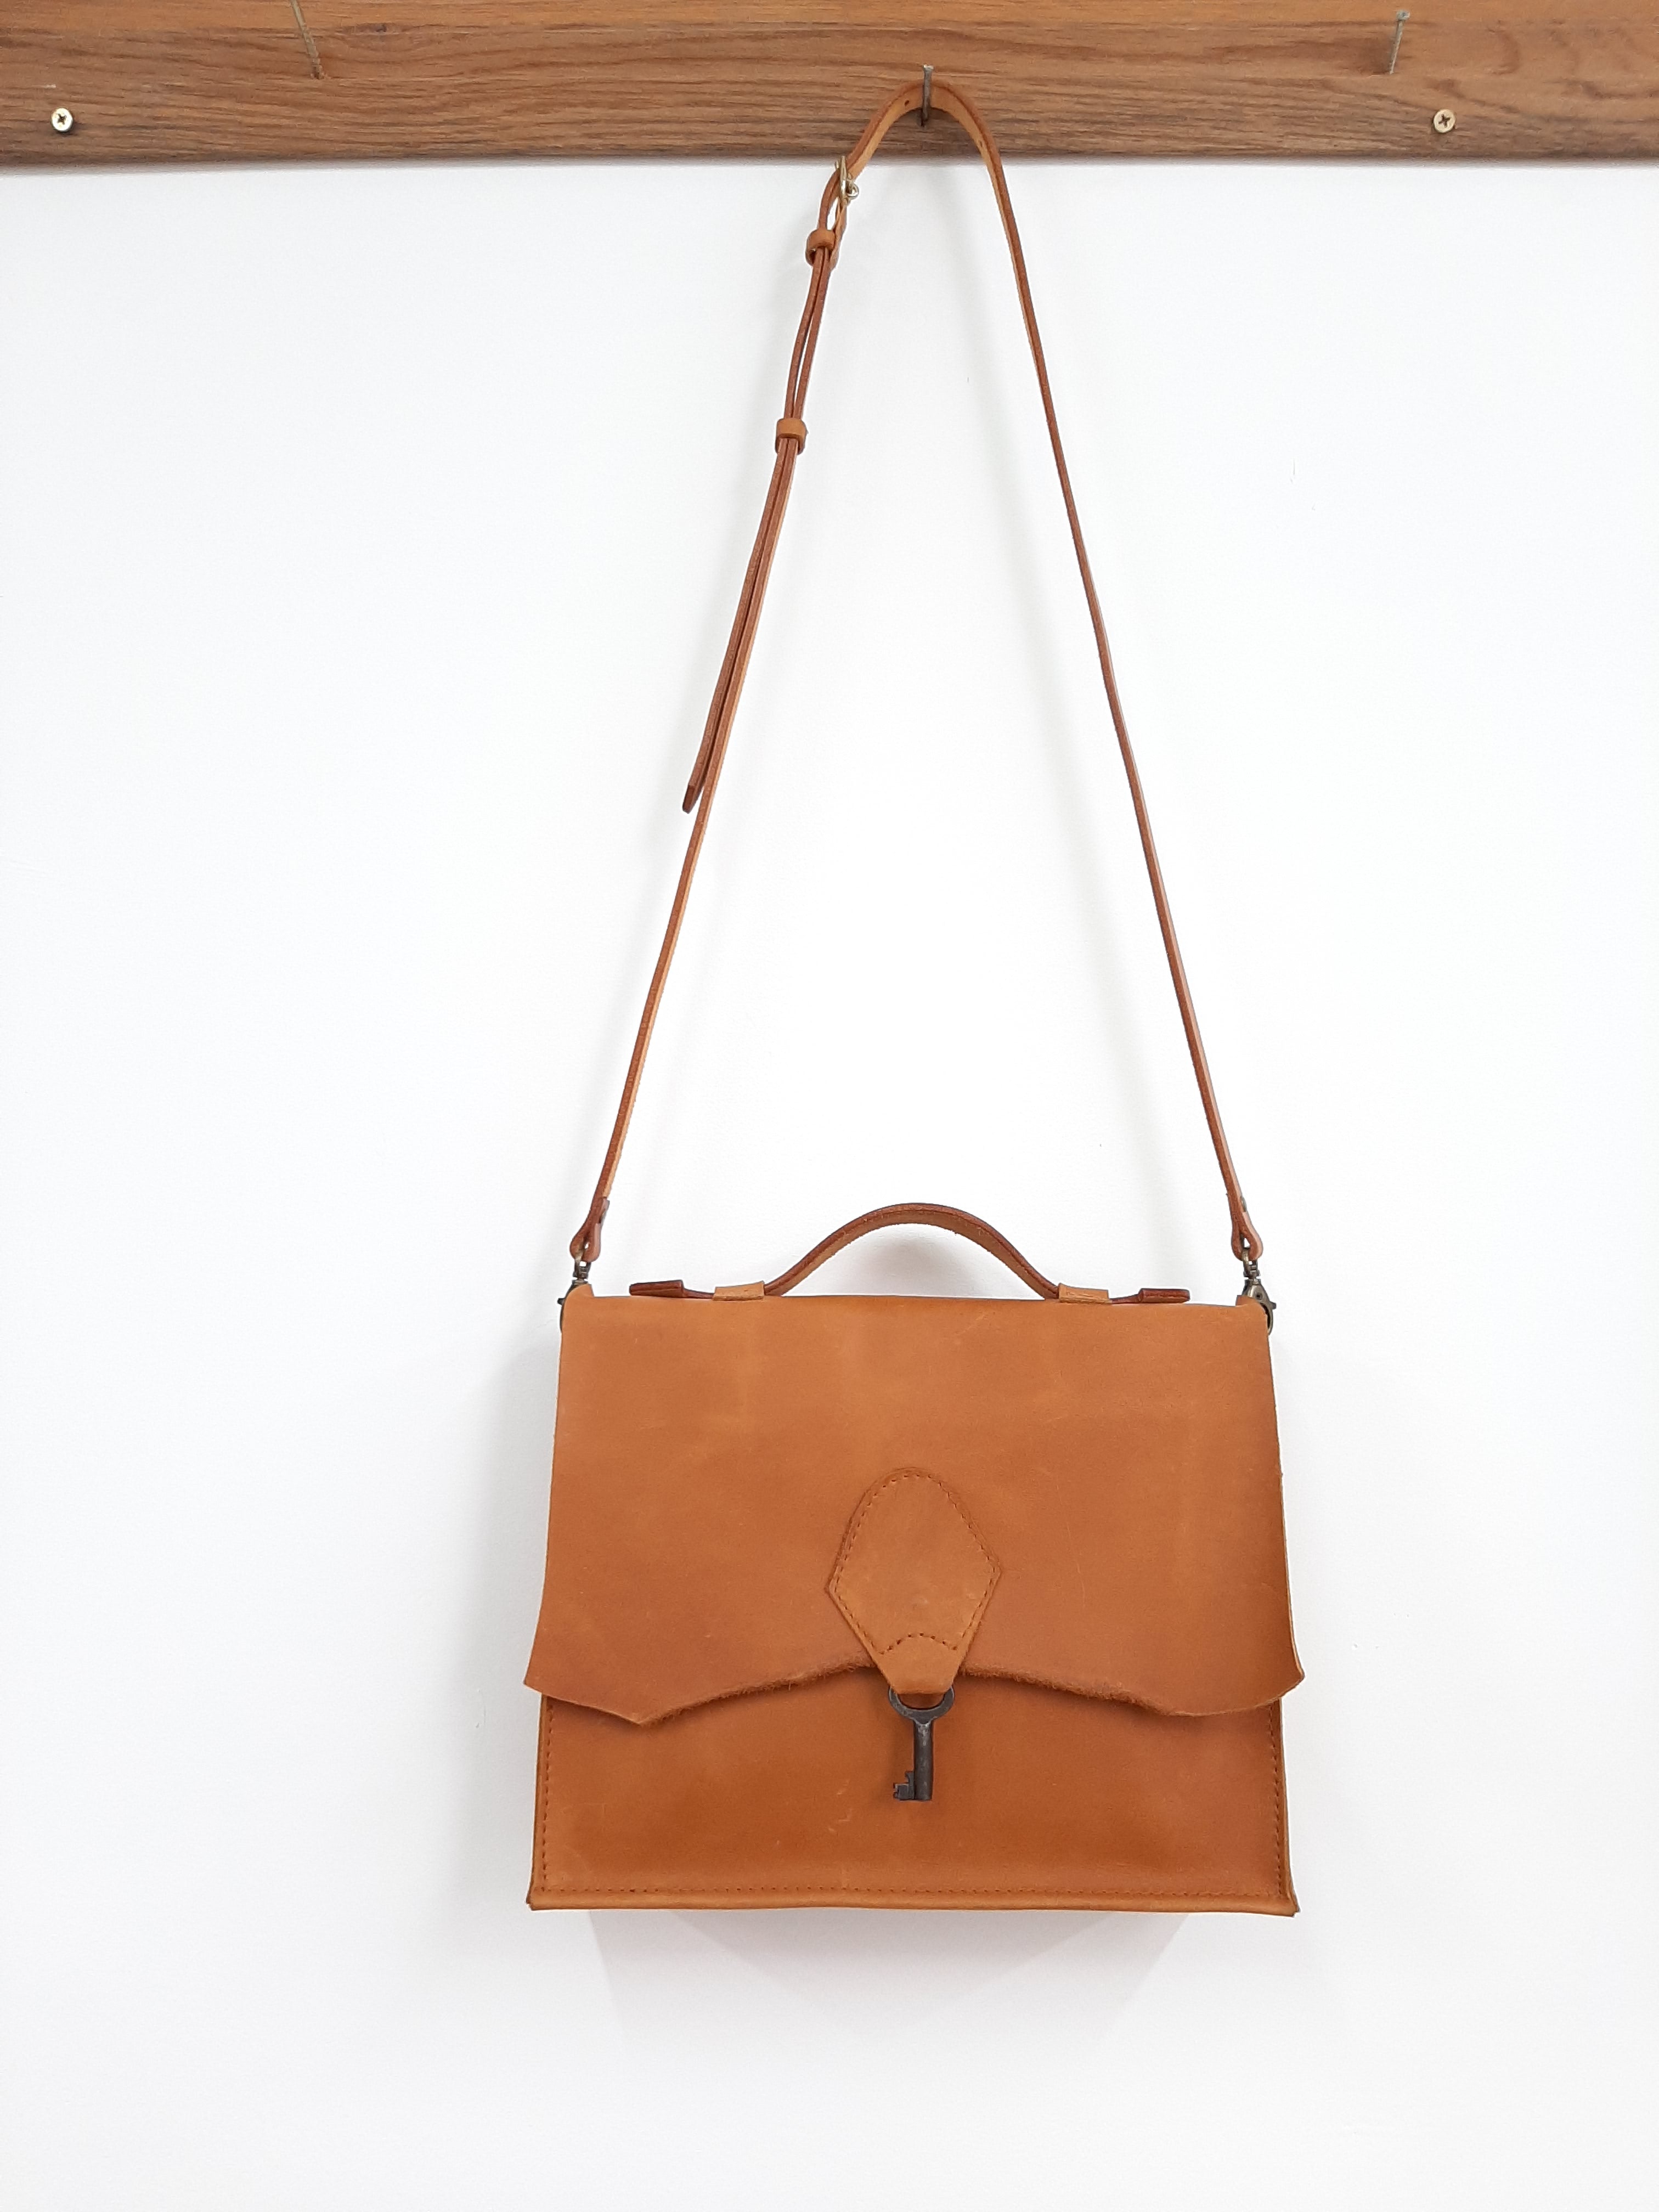 'The Lifestyle' Leather Bag - grab handle & shoulder strap